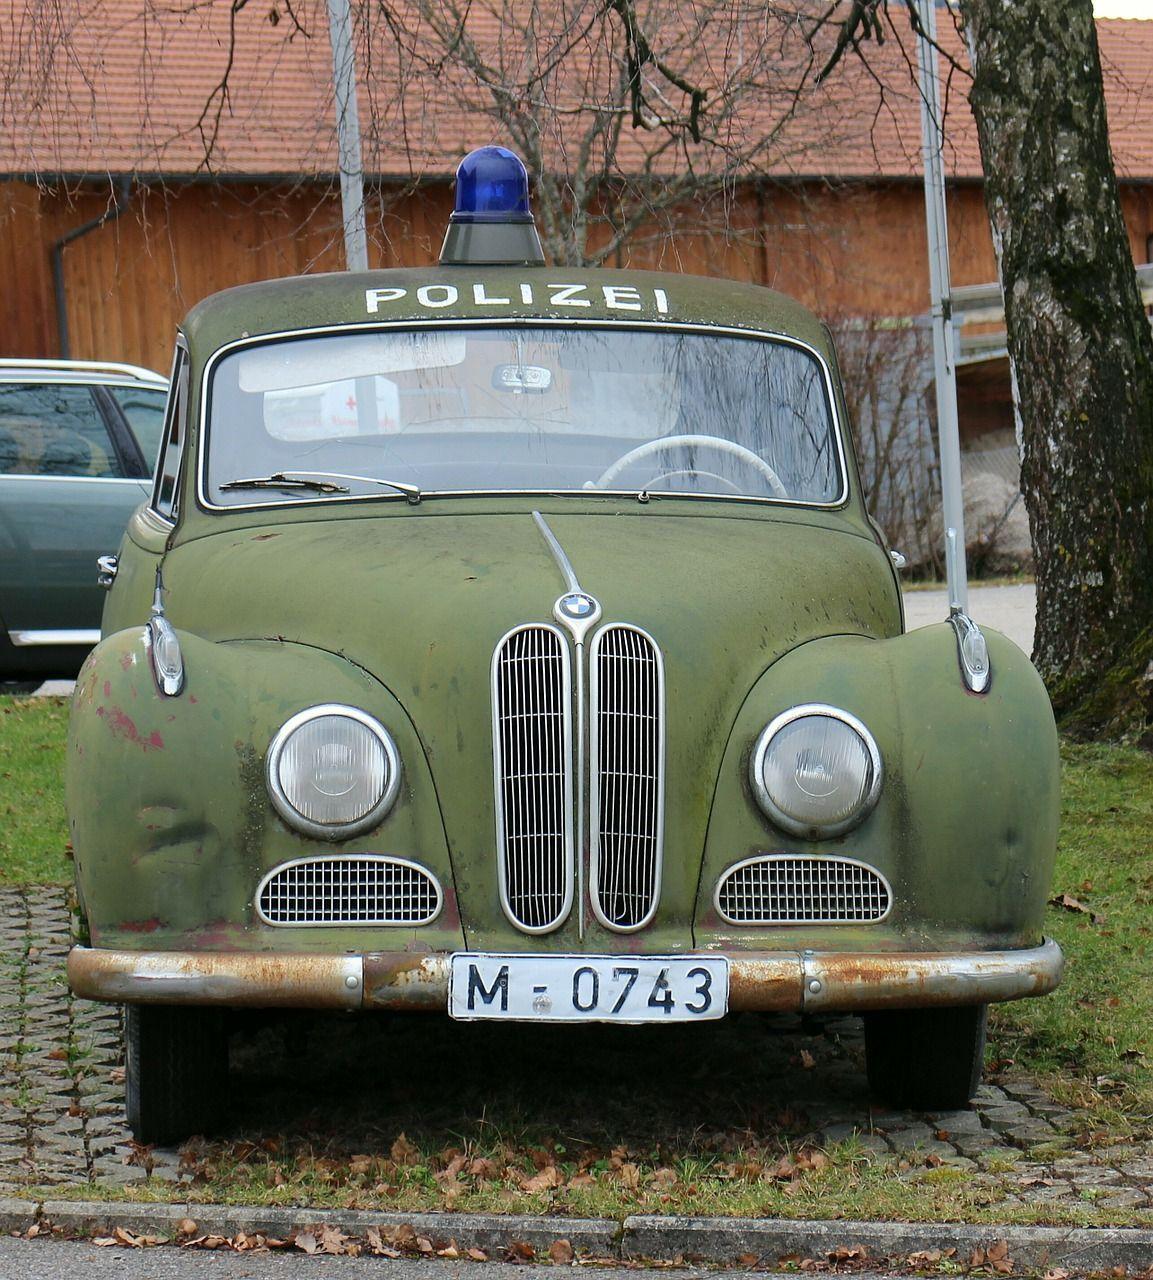 Old German Car Logo - Old German police car | Photo by Antranias, public domain | B M W ...